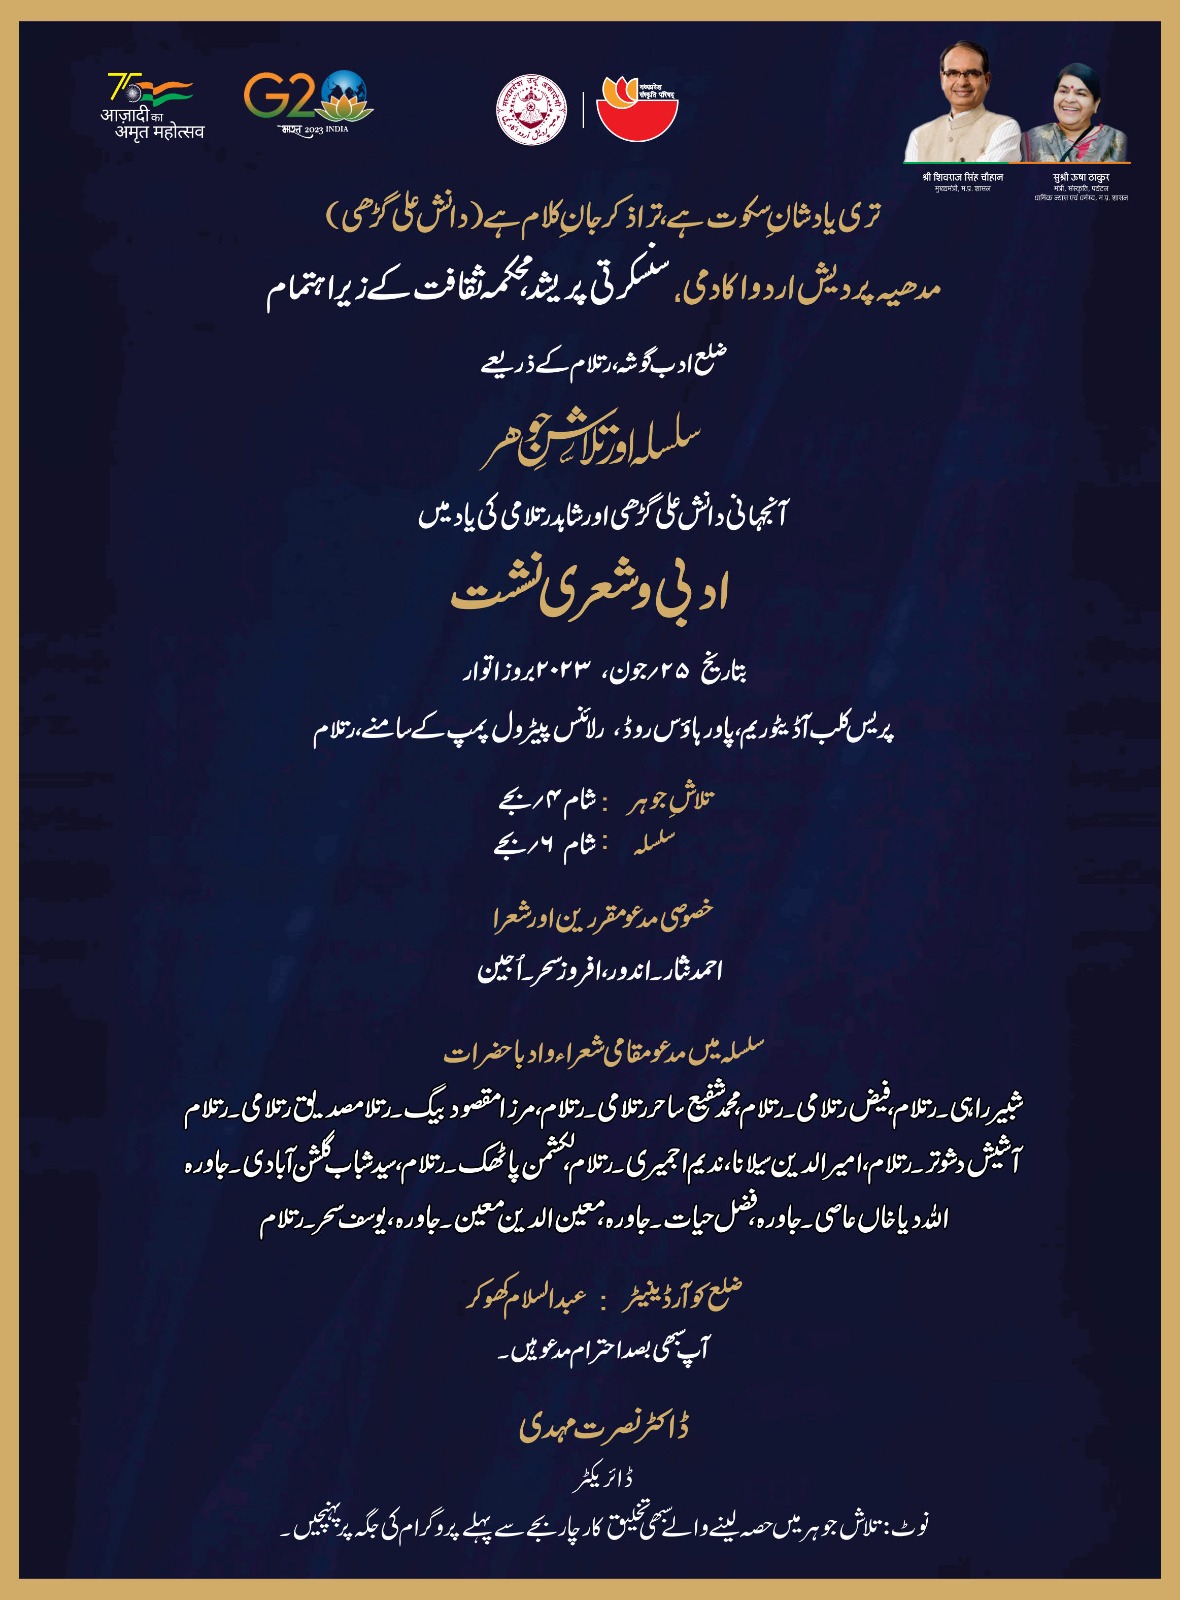 مدھیہ پردیش اردو اکیڈمی کے زیر اہتمام بیاددانش علی گڑھی اور شاہد رتلامی ادبی و شعری نشست